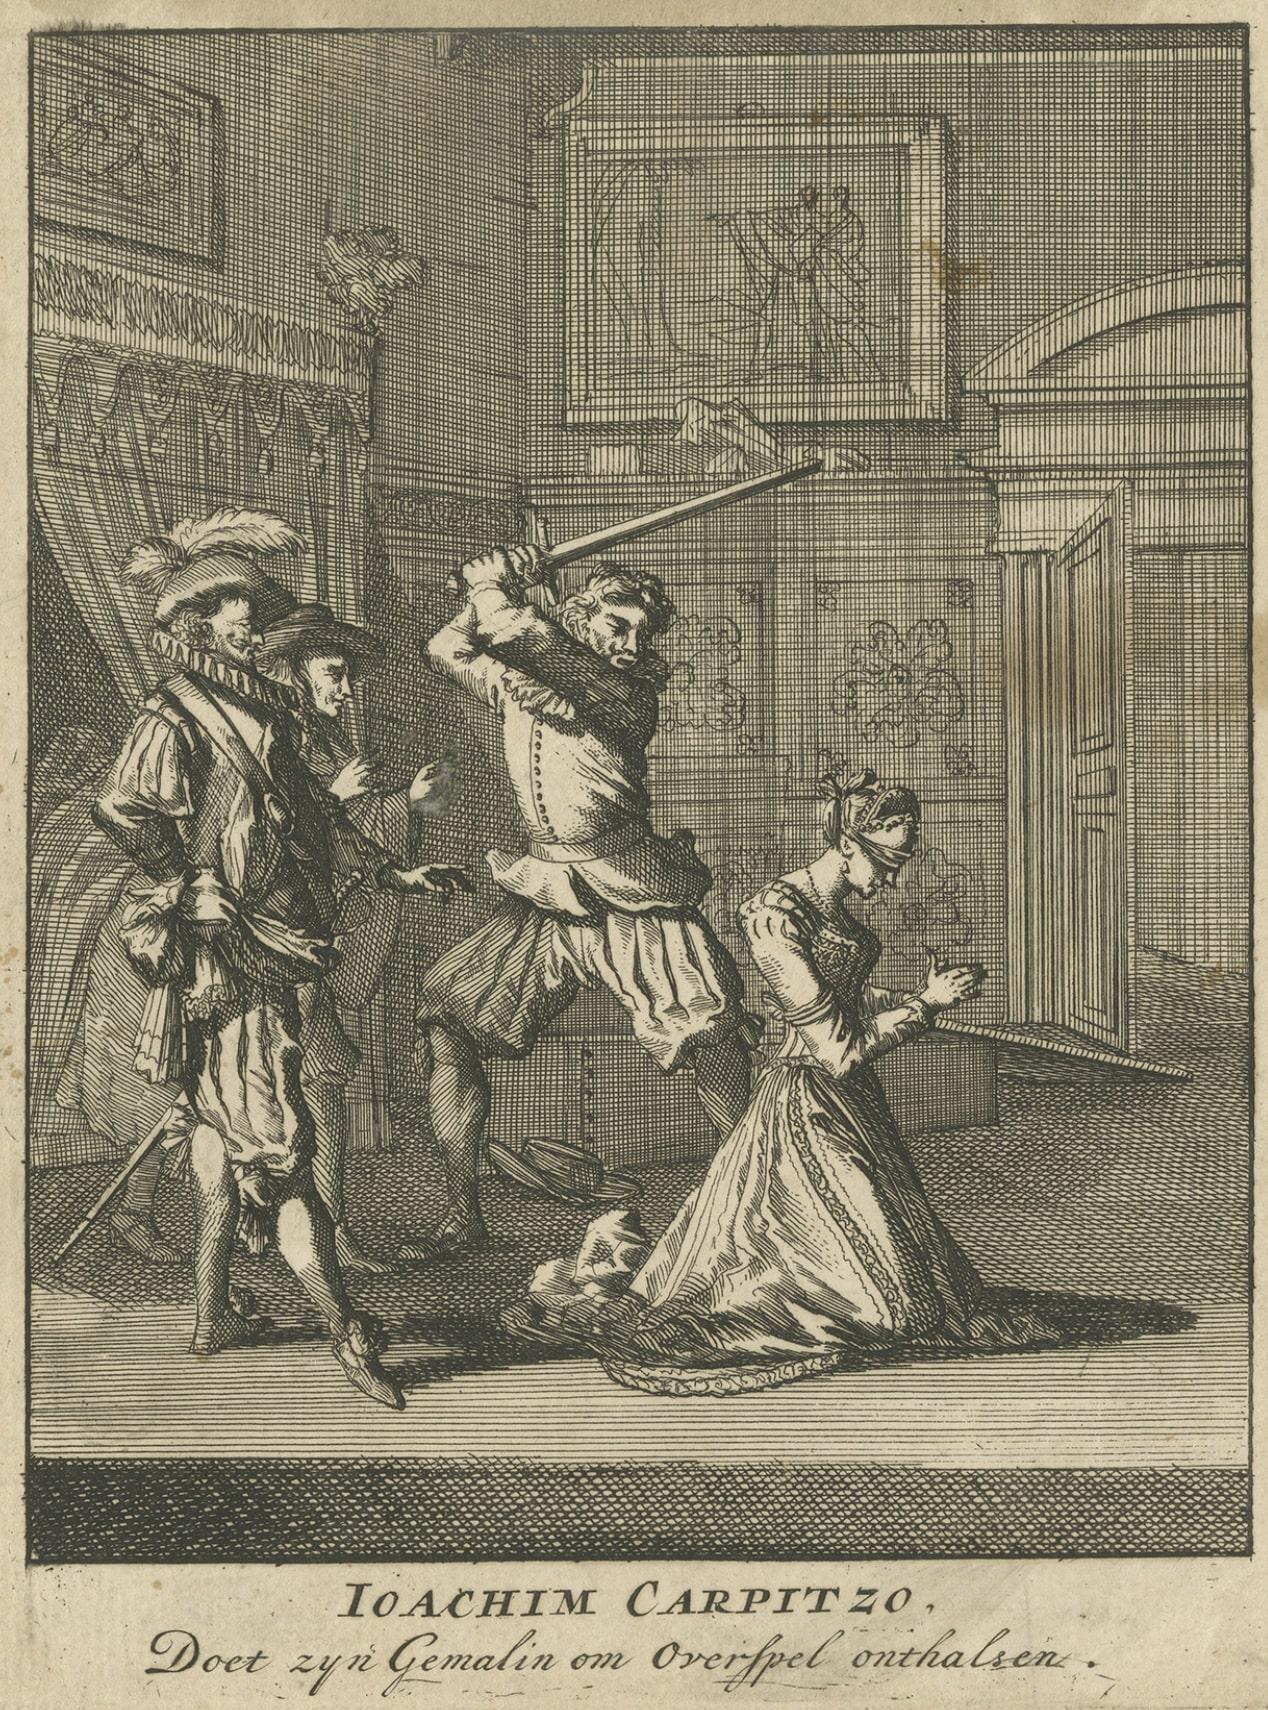 Paper Antique Print of Joachim Von Carpzov and His Wife's Execution, 'Decapitation'